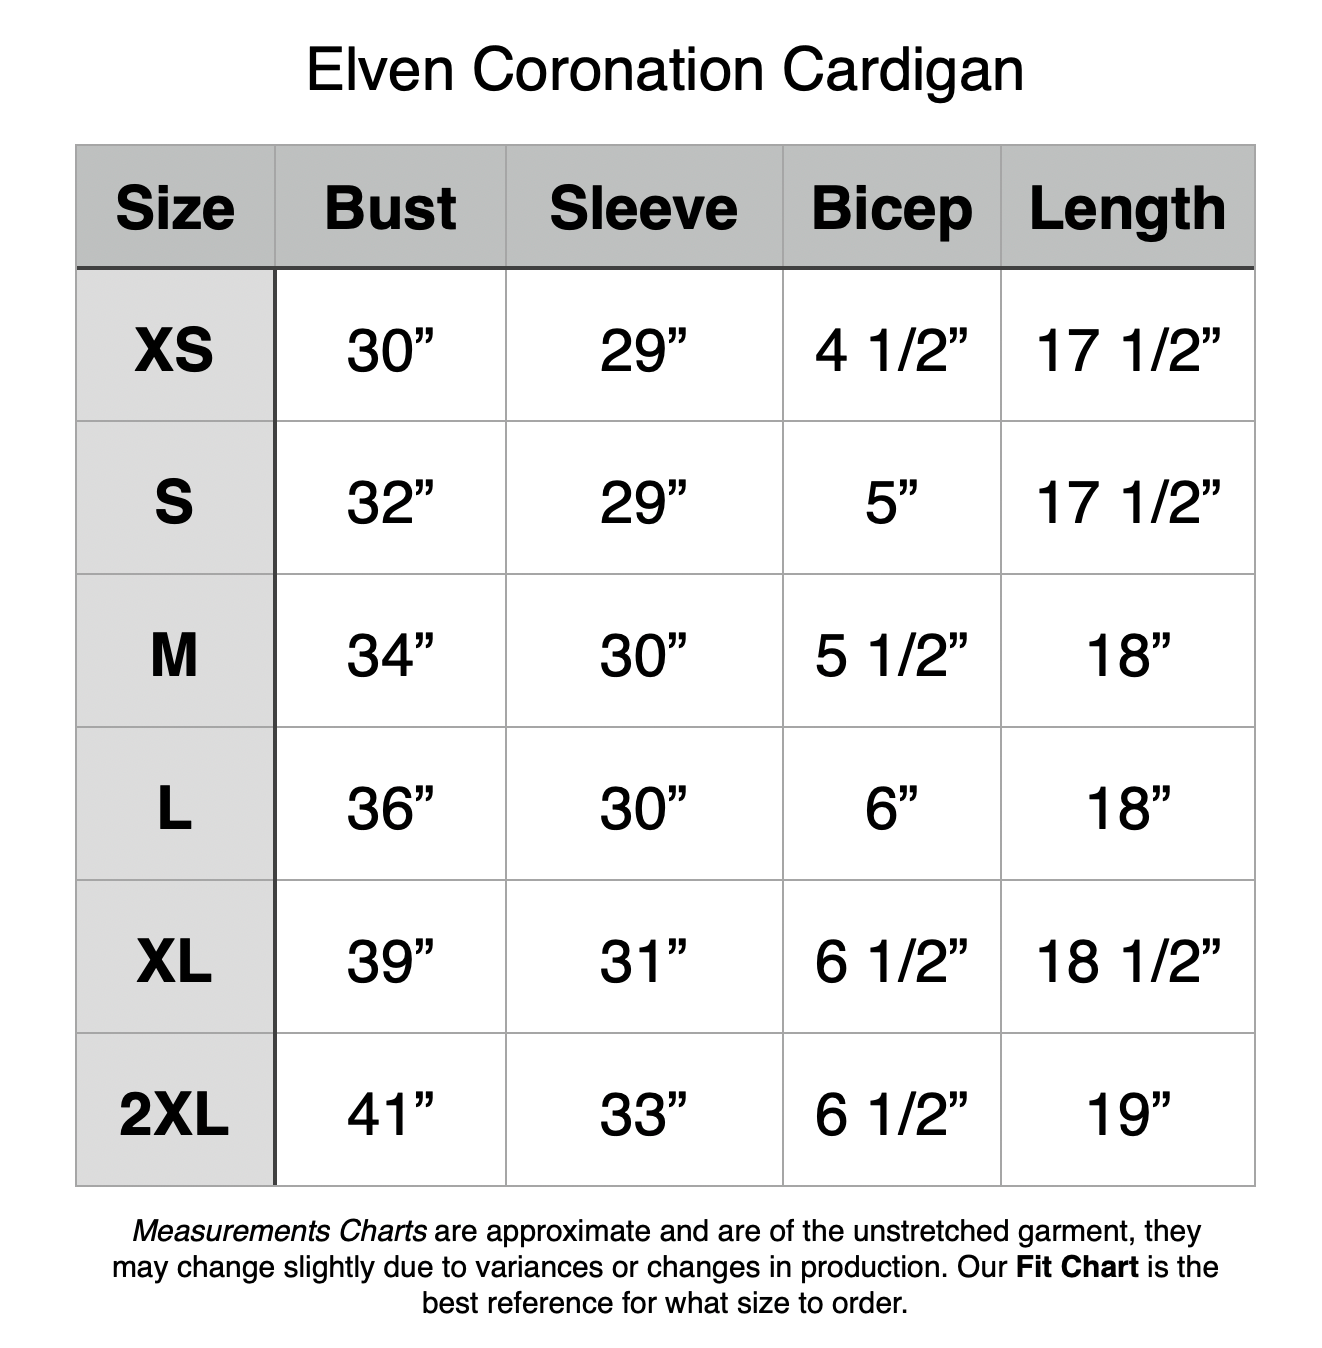 Elven Coronation Cardigan: XS - 30” Bust, 29” Sleeve, 4.5” Bicep, 17.5” Length. S - 32” Bust, 29” Sleeve, 5” Bicep, 17.5” Length. M - 34” Bust, 30” Sleeve, 5.5” Bicep, 18” Length. L - 36” Bust, 30” Sleeve, 6” Bicep, 18” Length.  XL - 39” Bust, 31” Sleeve, 6.5” Bicep, 18.5” Length. 2XL - 41” Bust, 33” Sleeve, 6.5” Bicep, 19” Length.